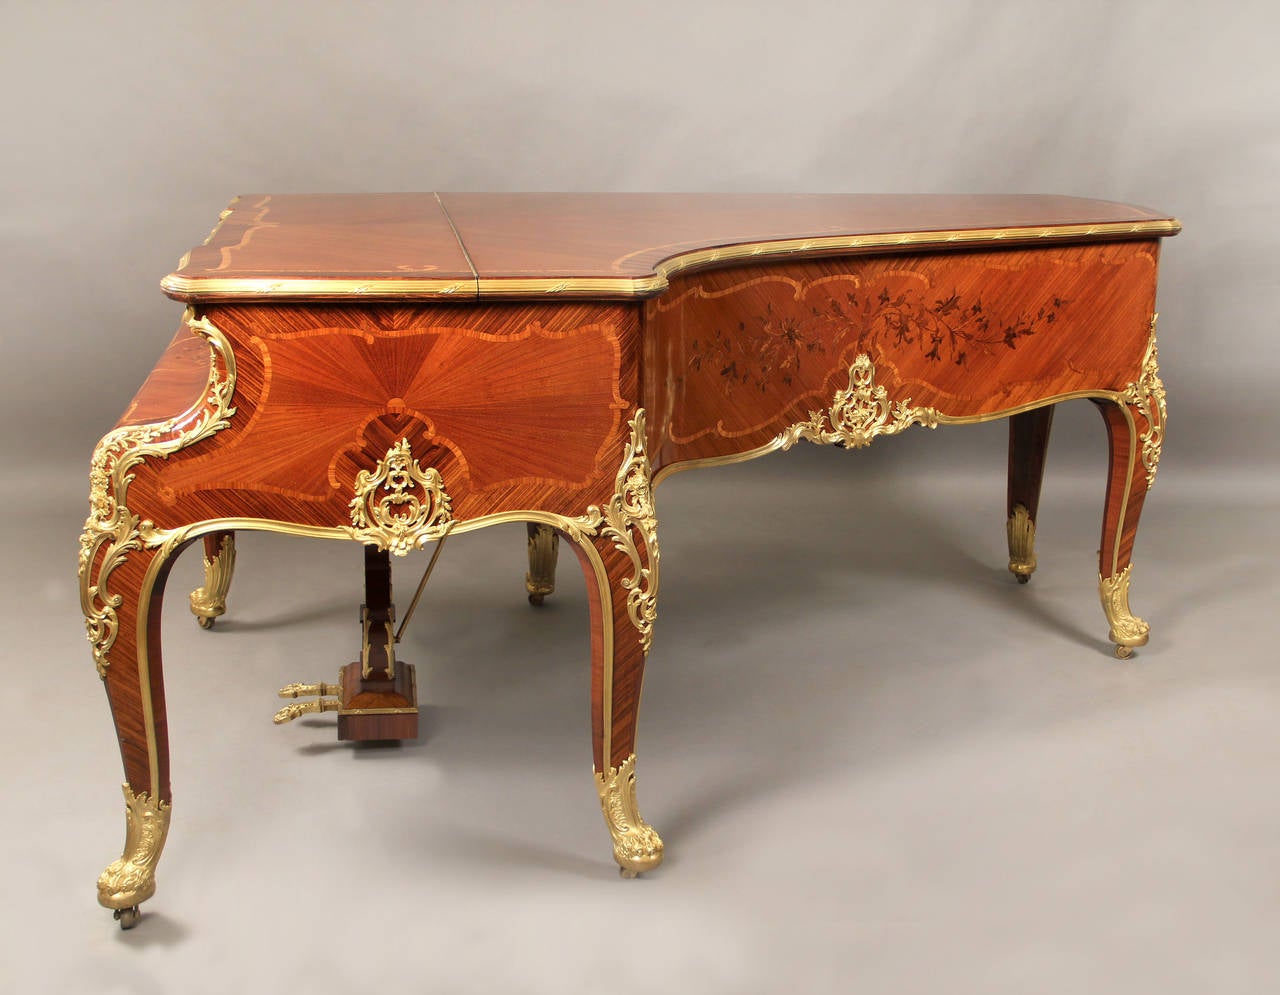 Belle Époque Gilt Bronze-Mounted Marquetry Six-Leg Grand Erard Piano by François Linke